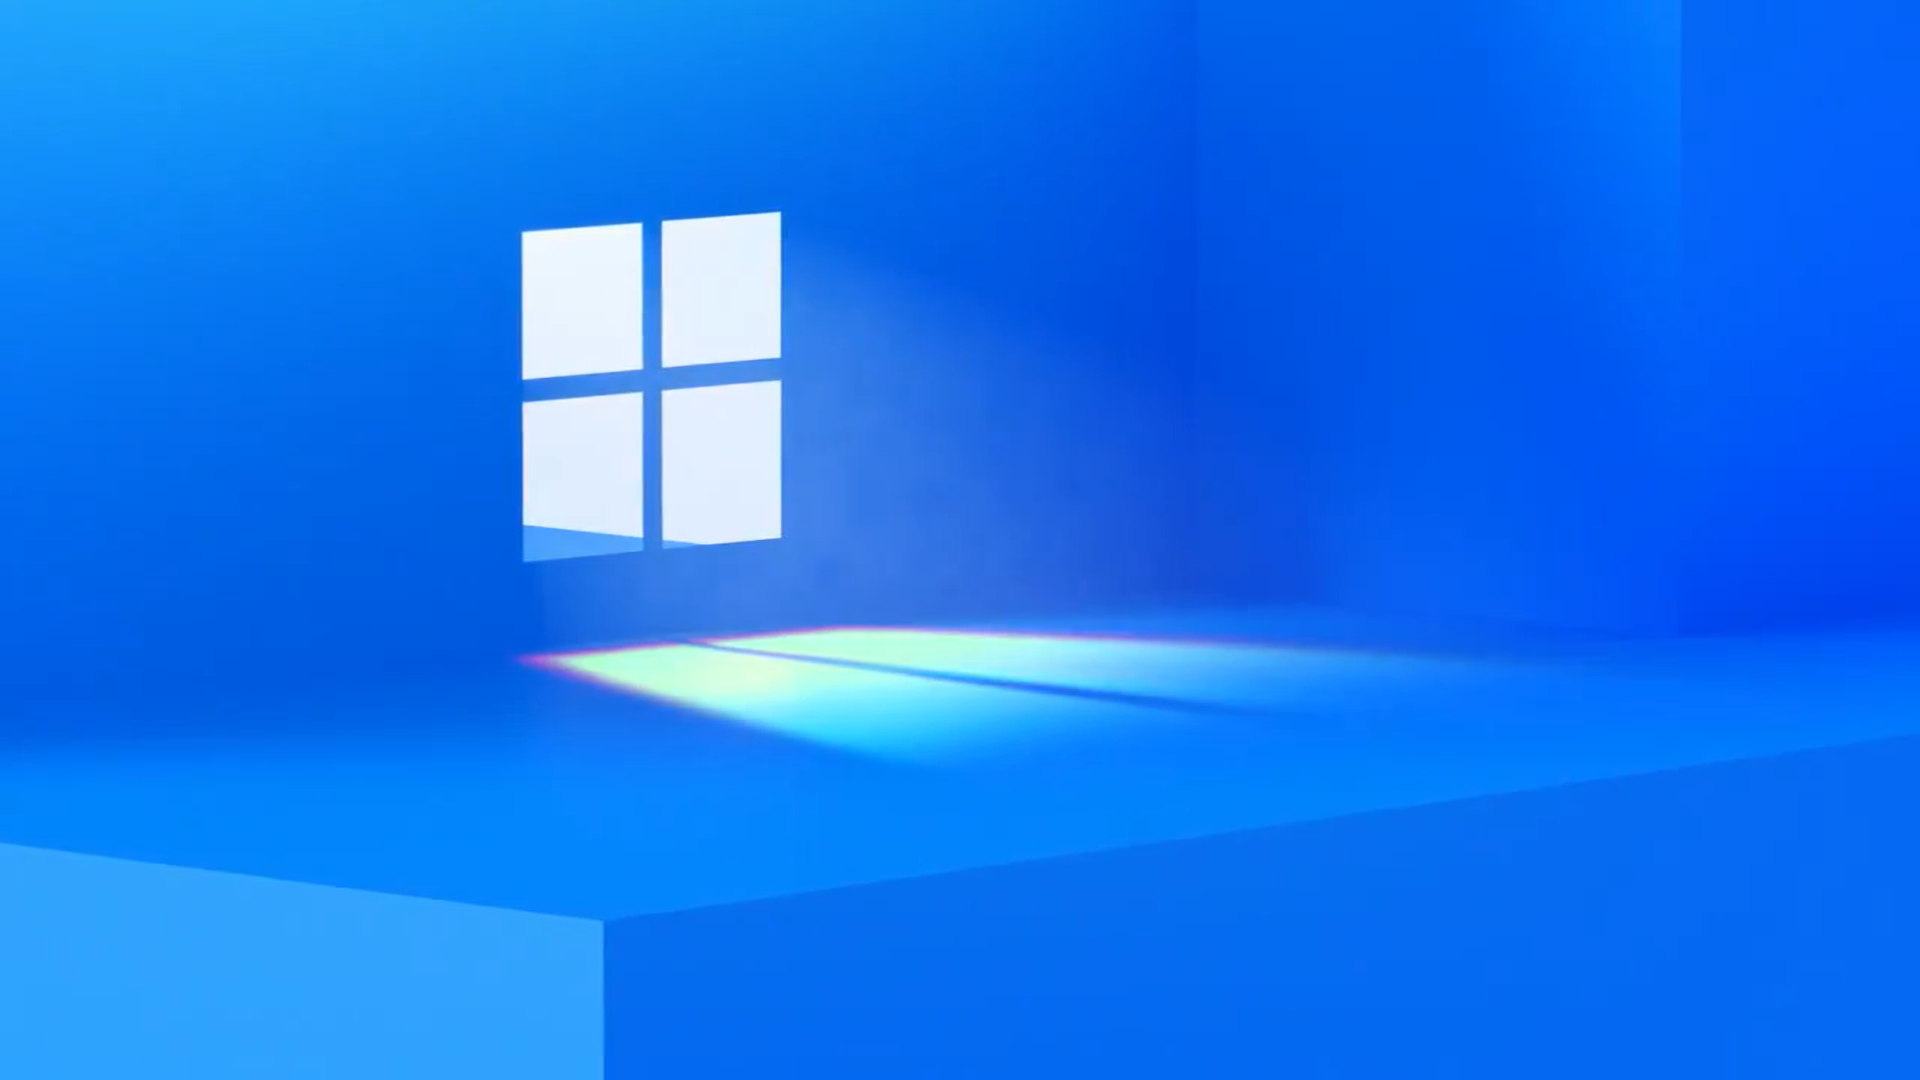 Windows 11 Wallpaper By Protheme On Deviantart